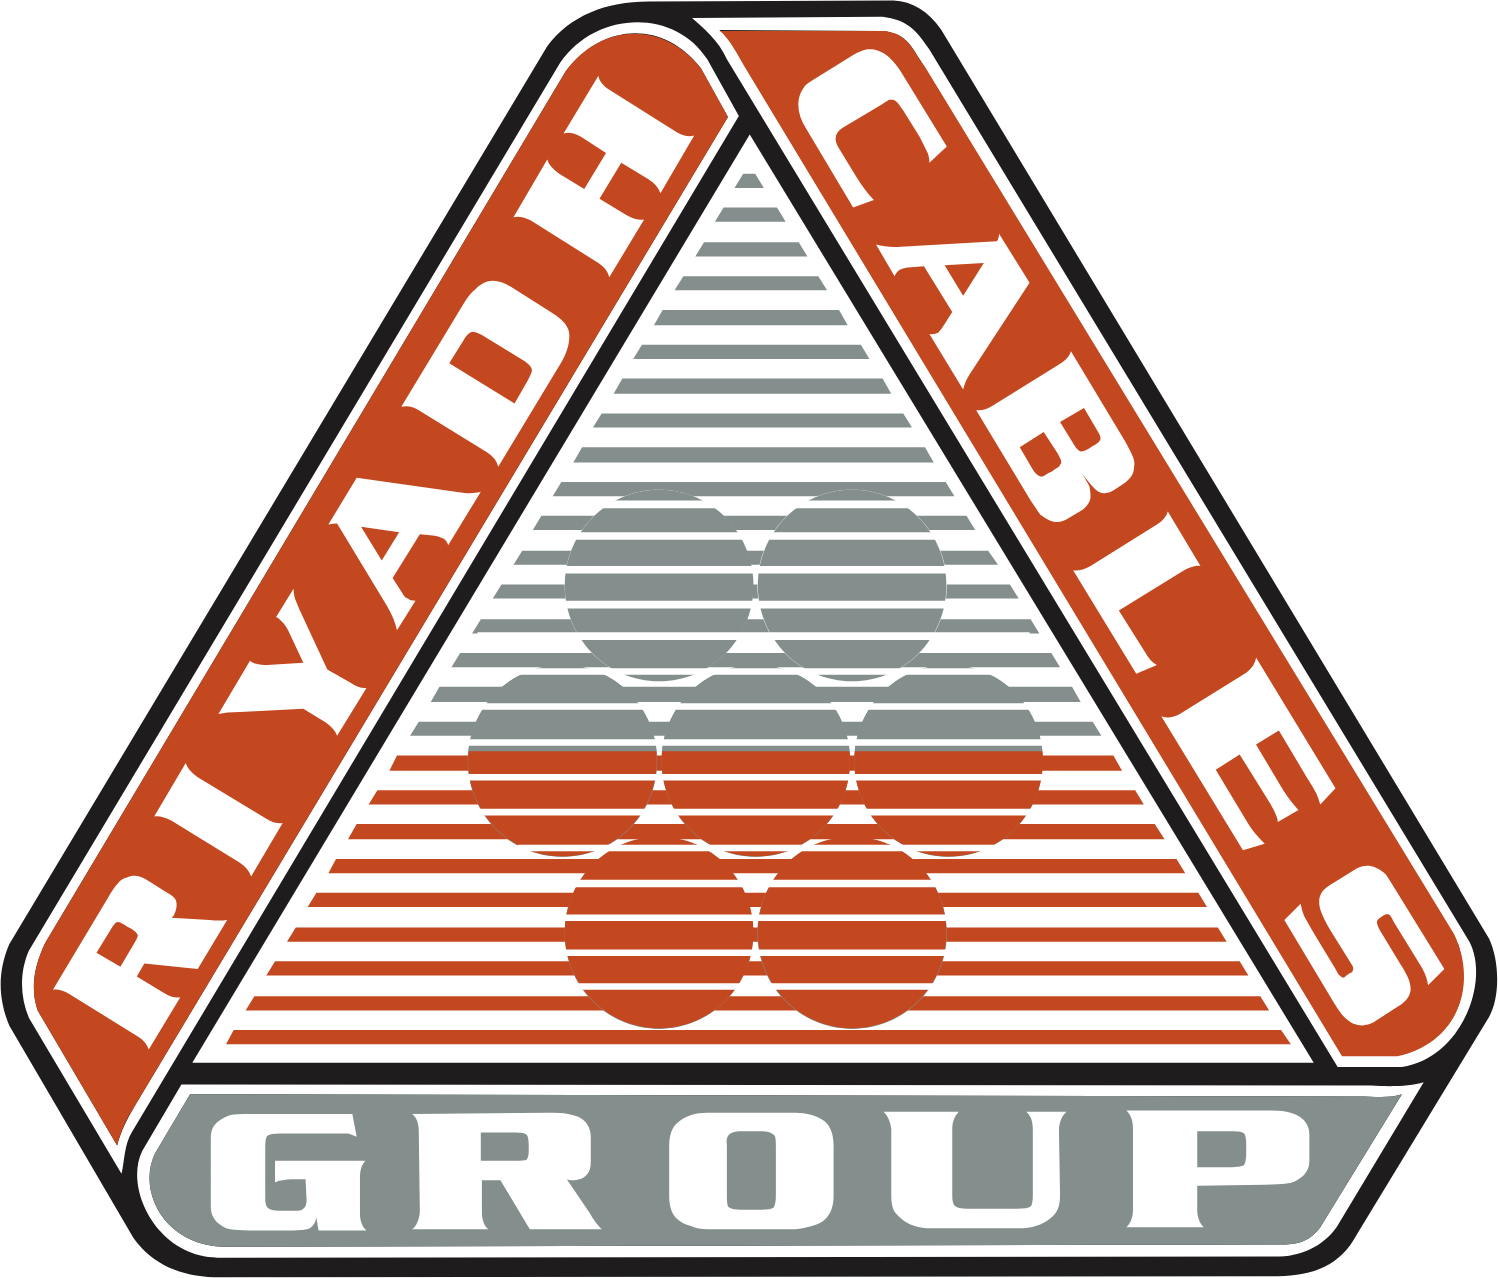 Riyadh Cables Group Company logo (transparent PNG)